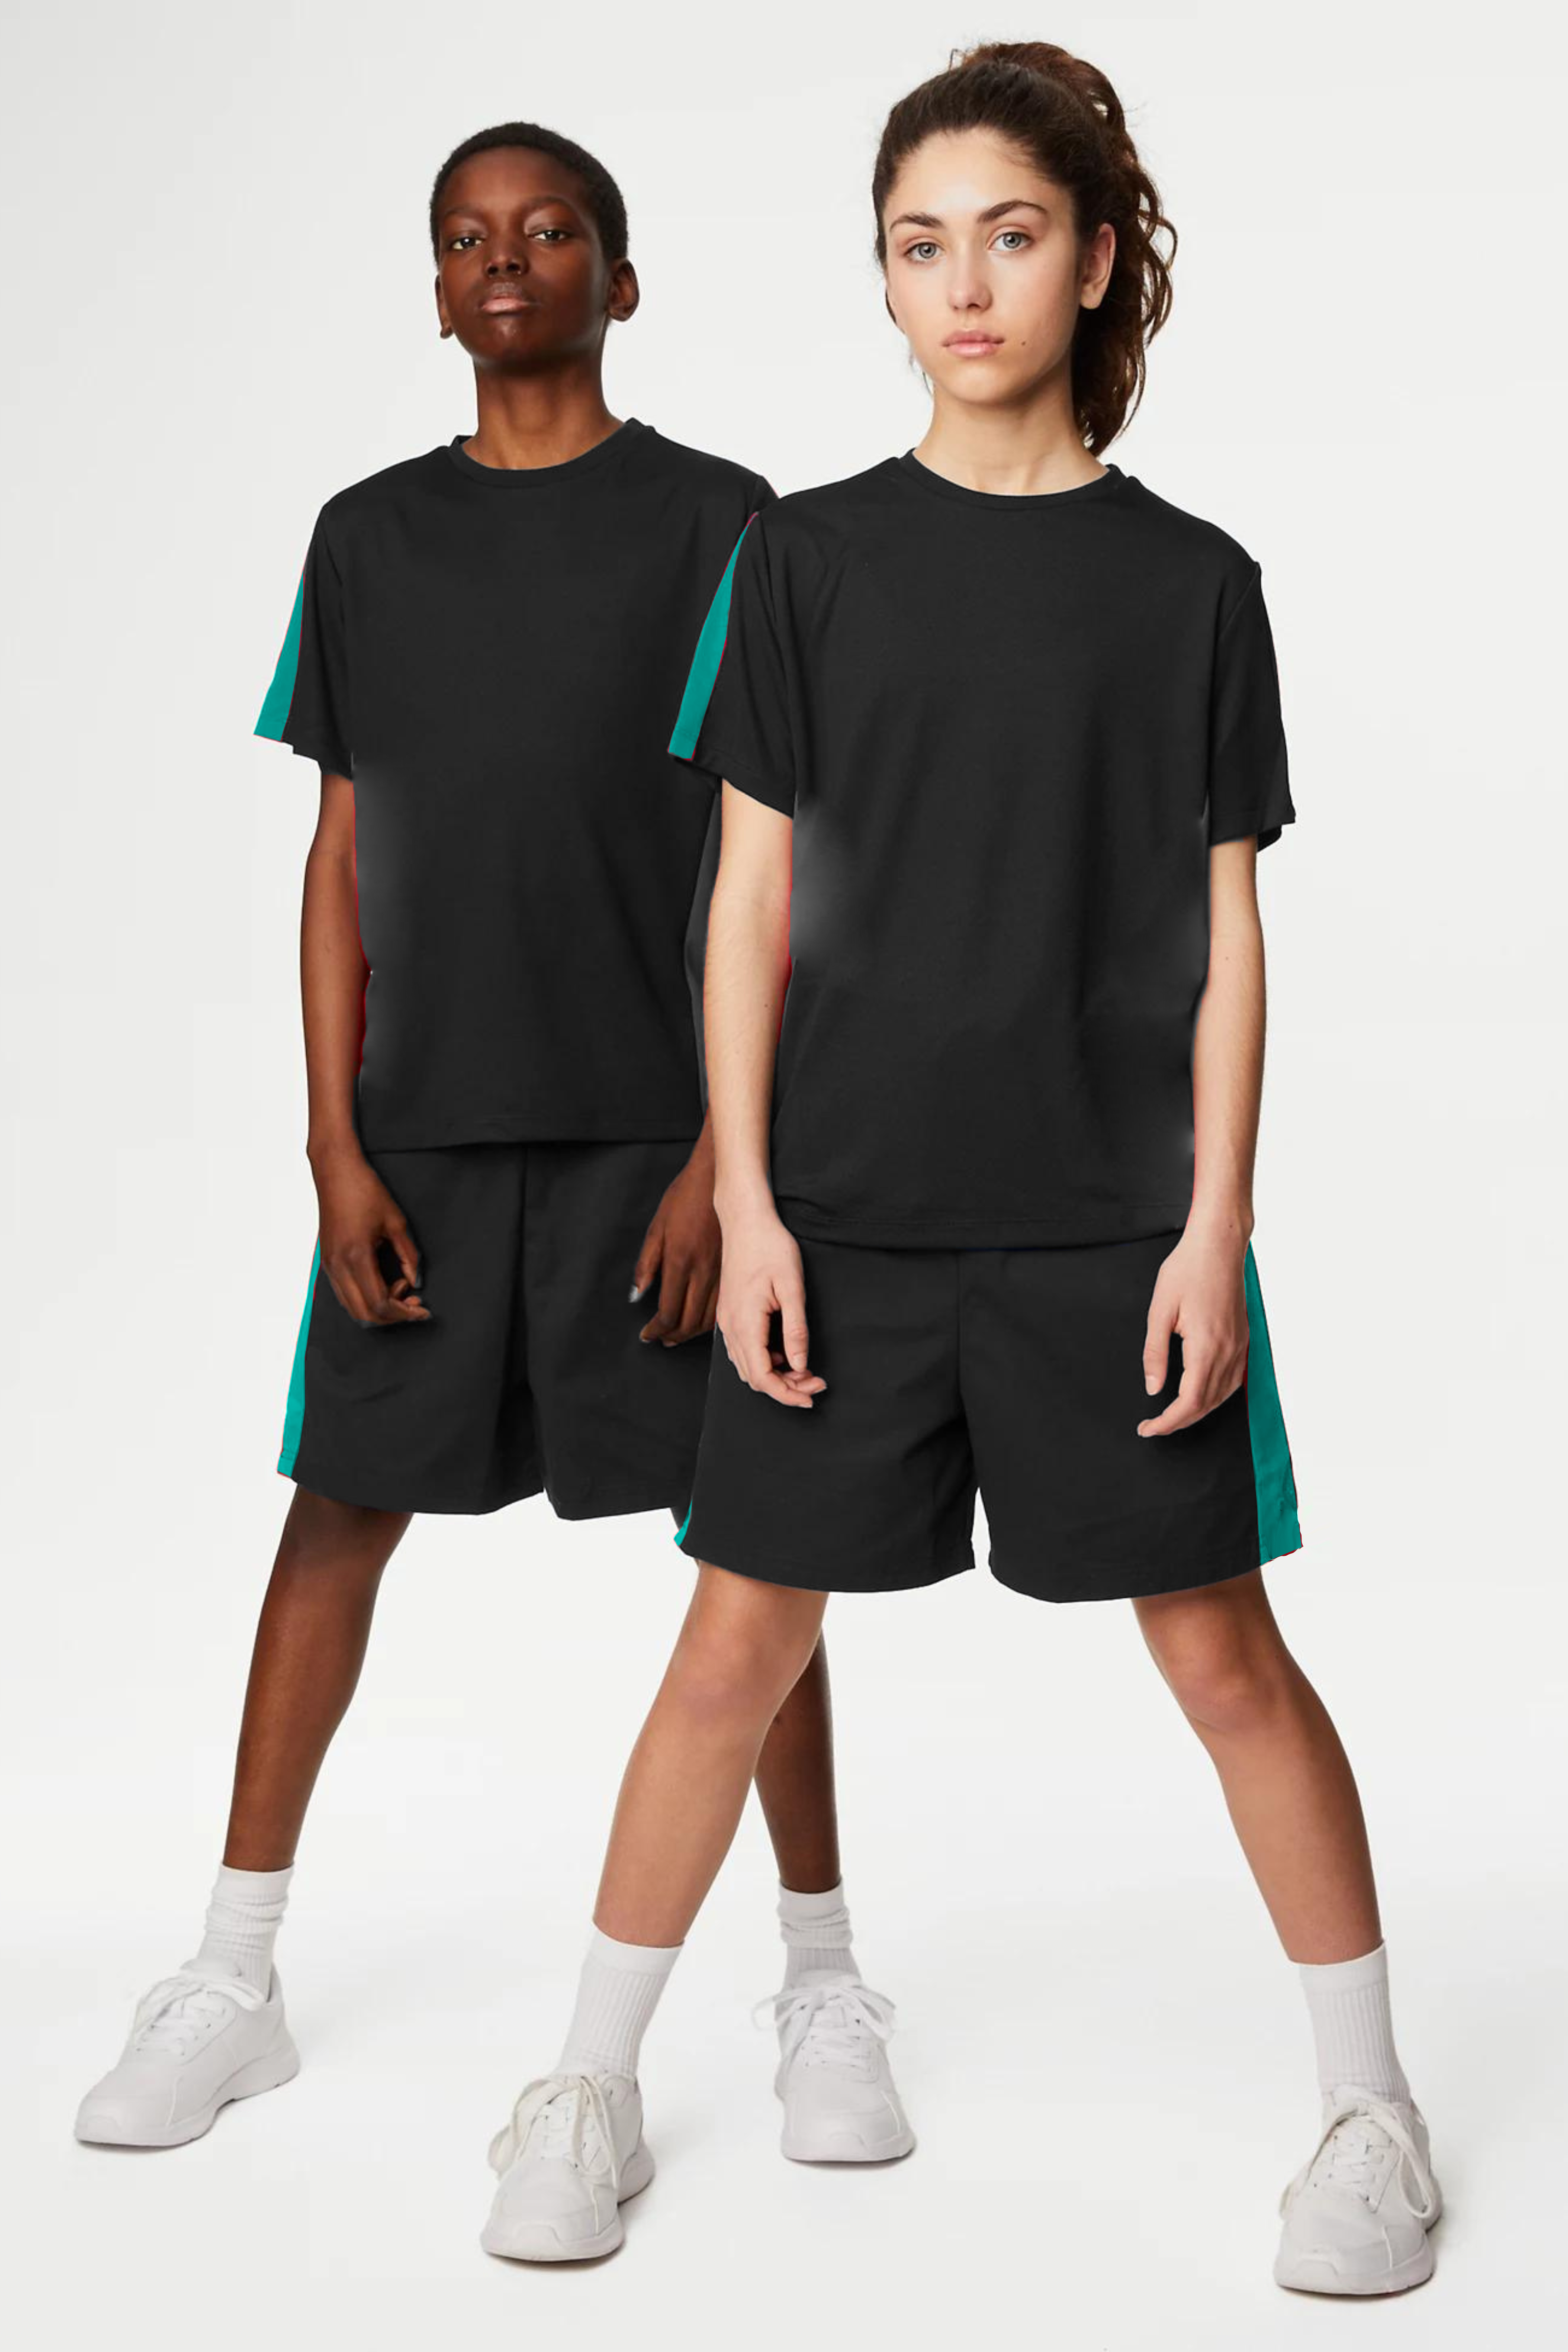 Unisex Active T-Shirt and Shorts zinc & black